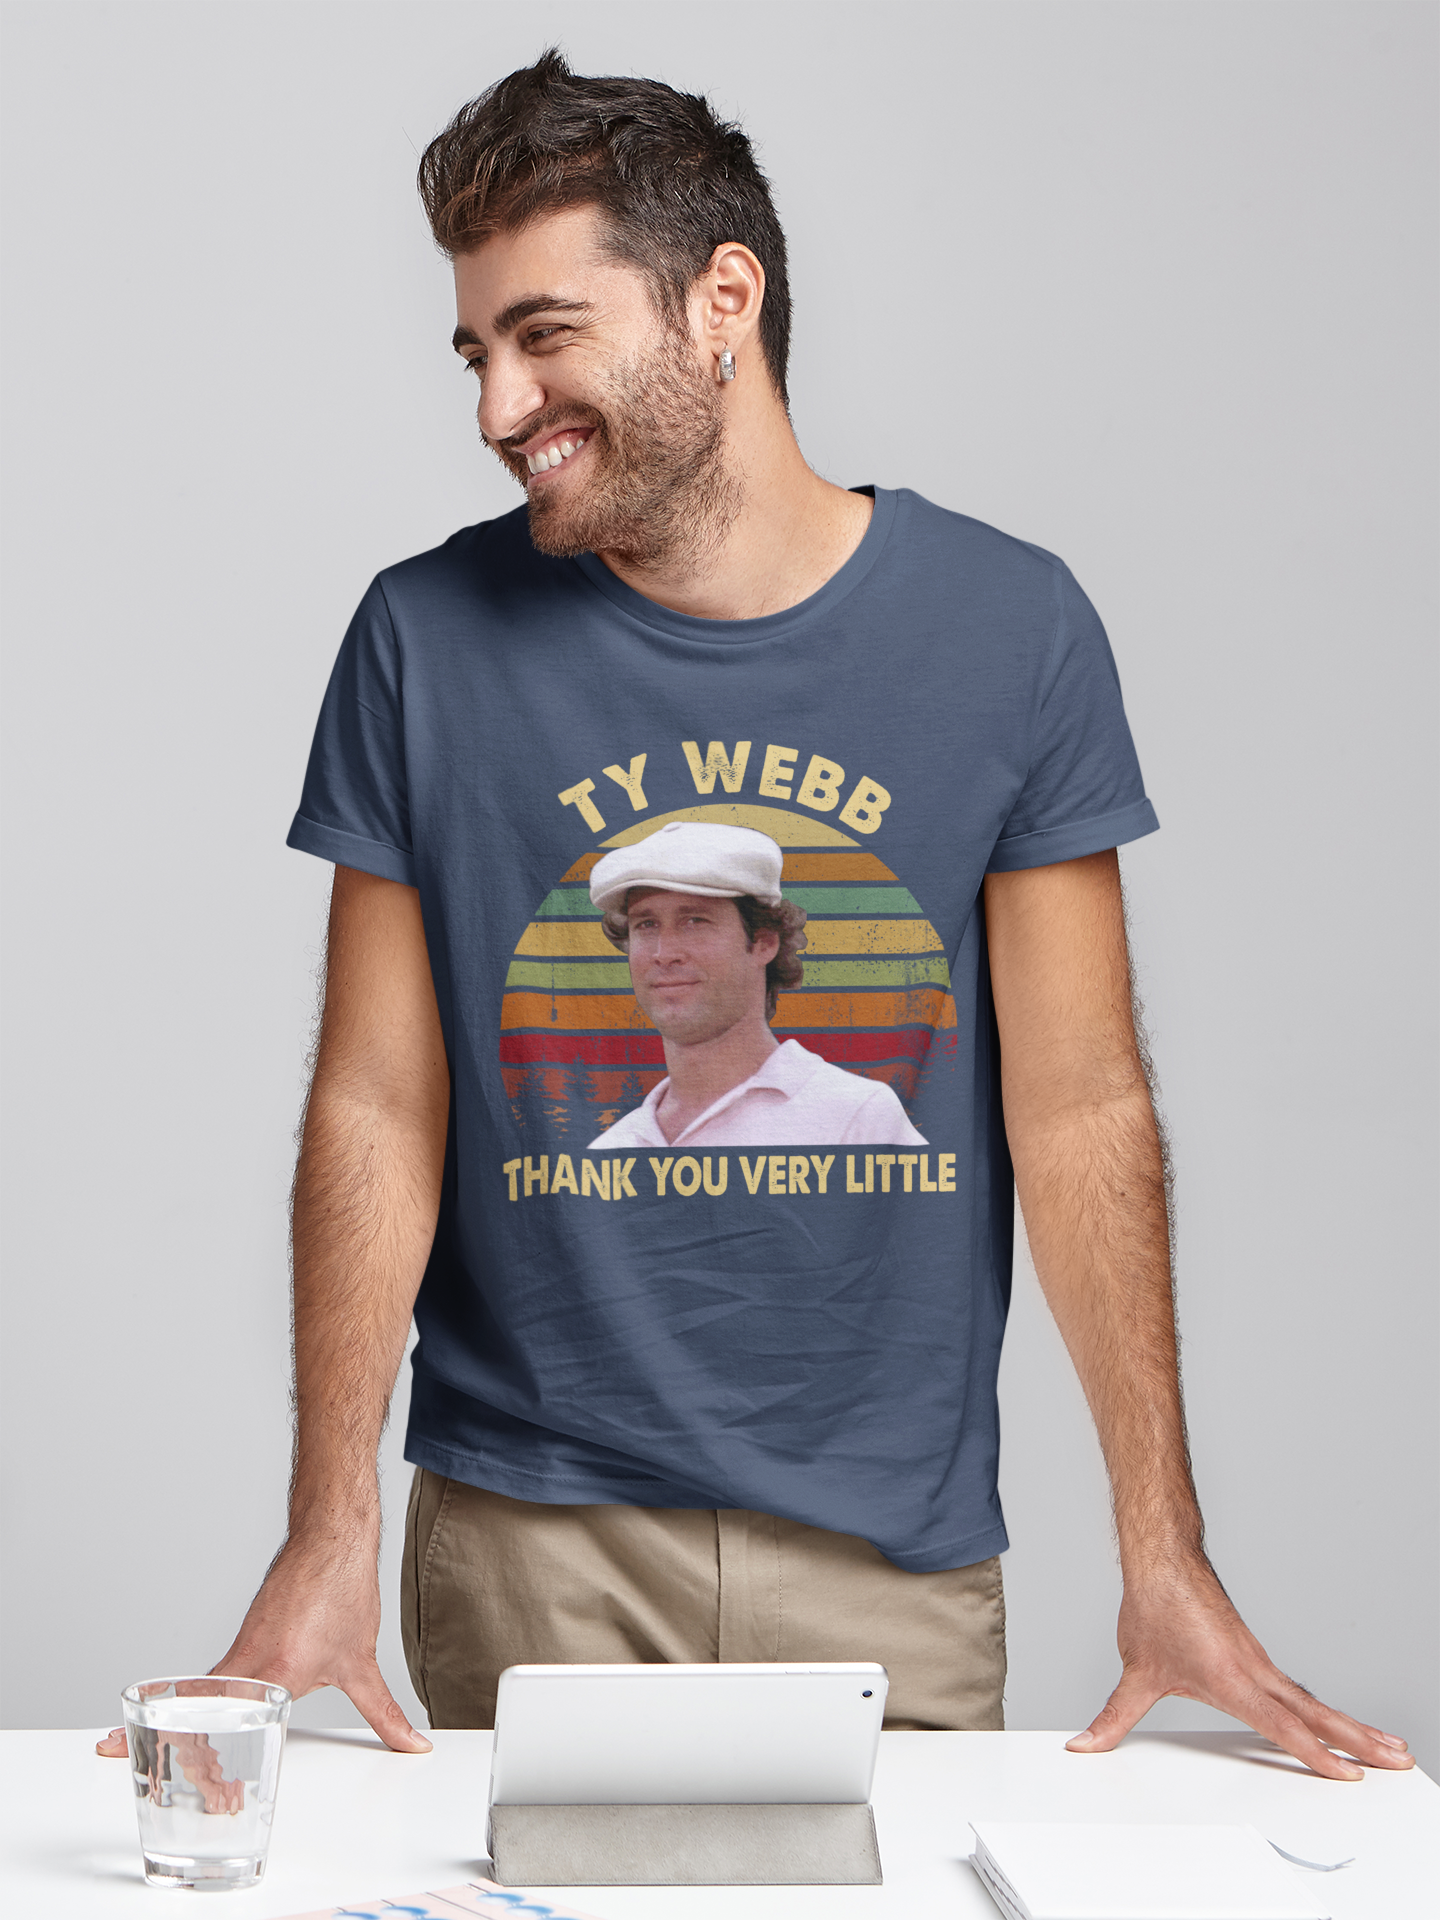 Caddyshack Vintage T Shirt, Ty Webb T Shirt, Ty Webb Thank You Very Little Tshirt